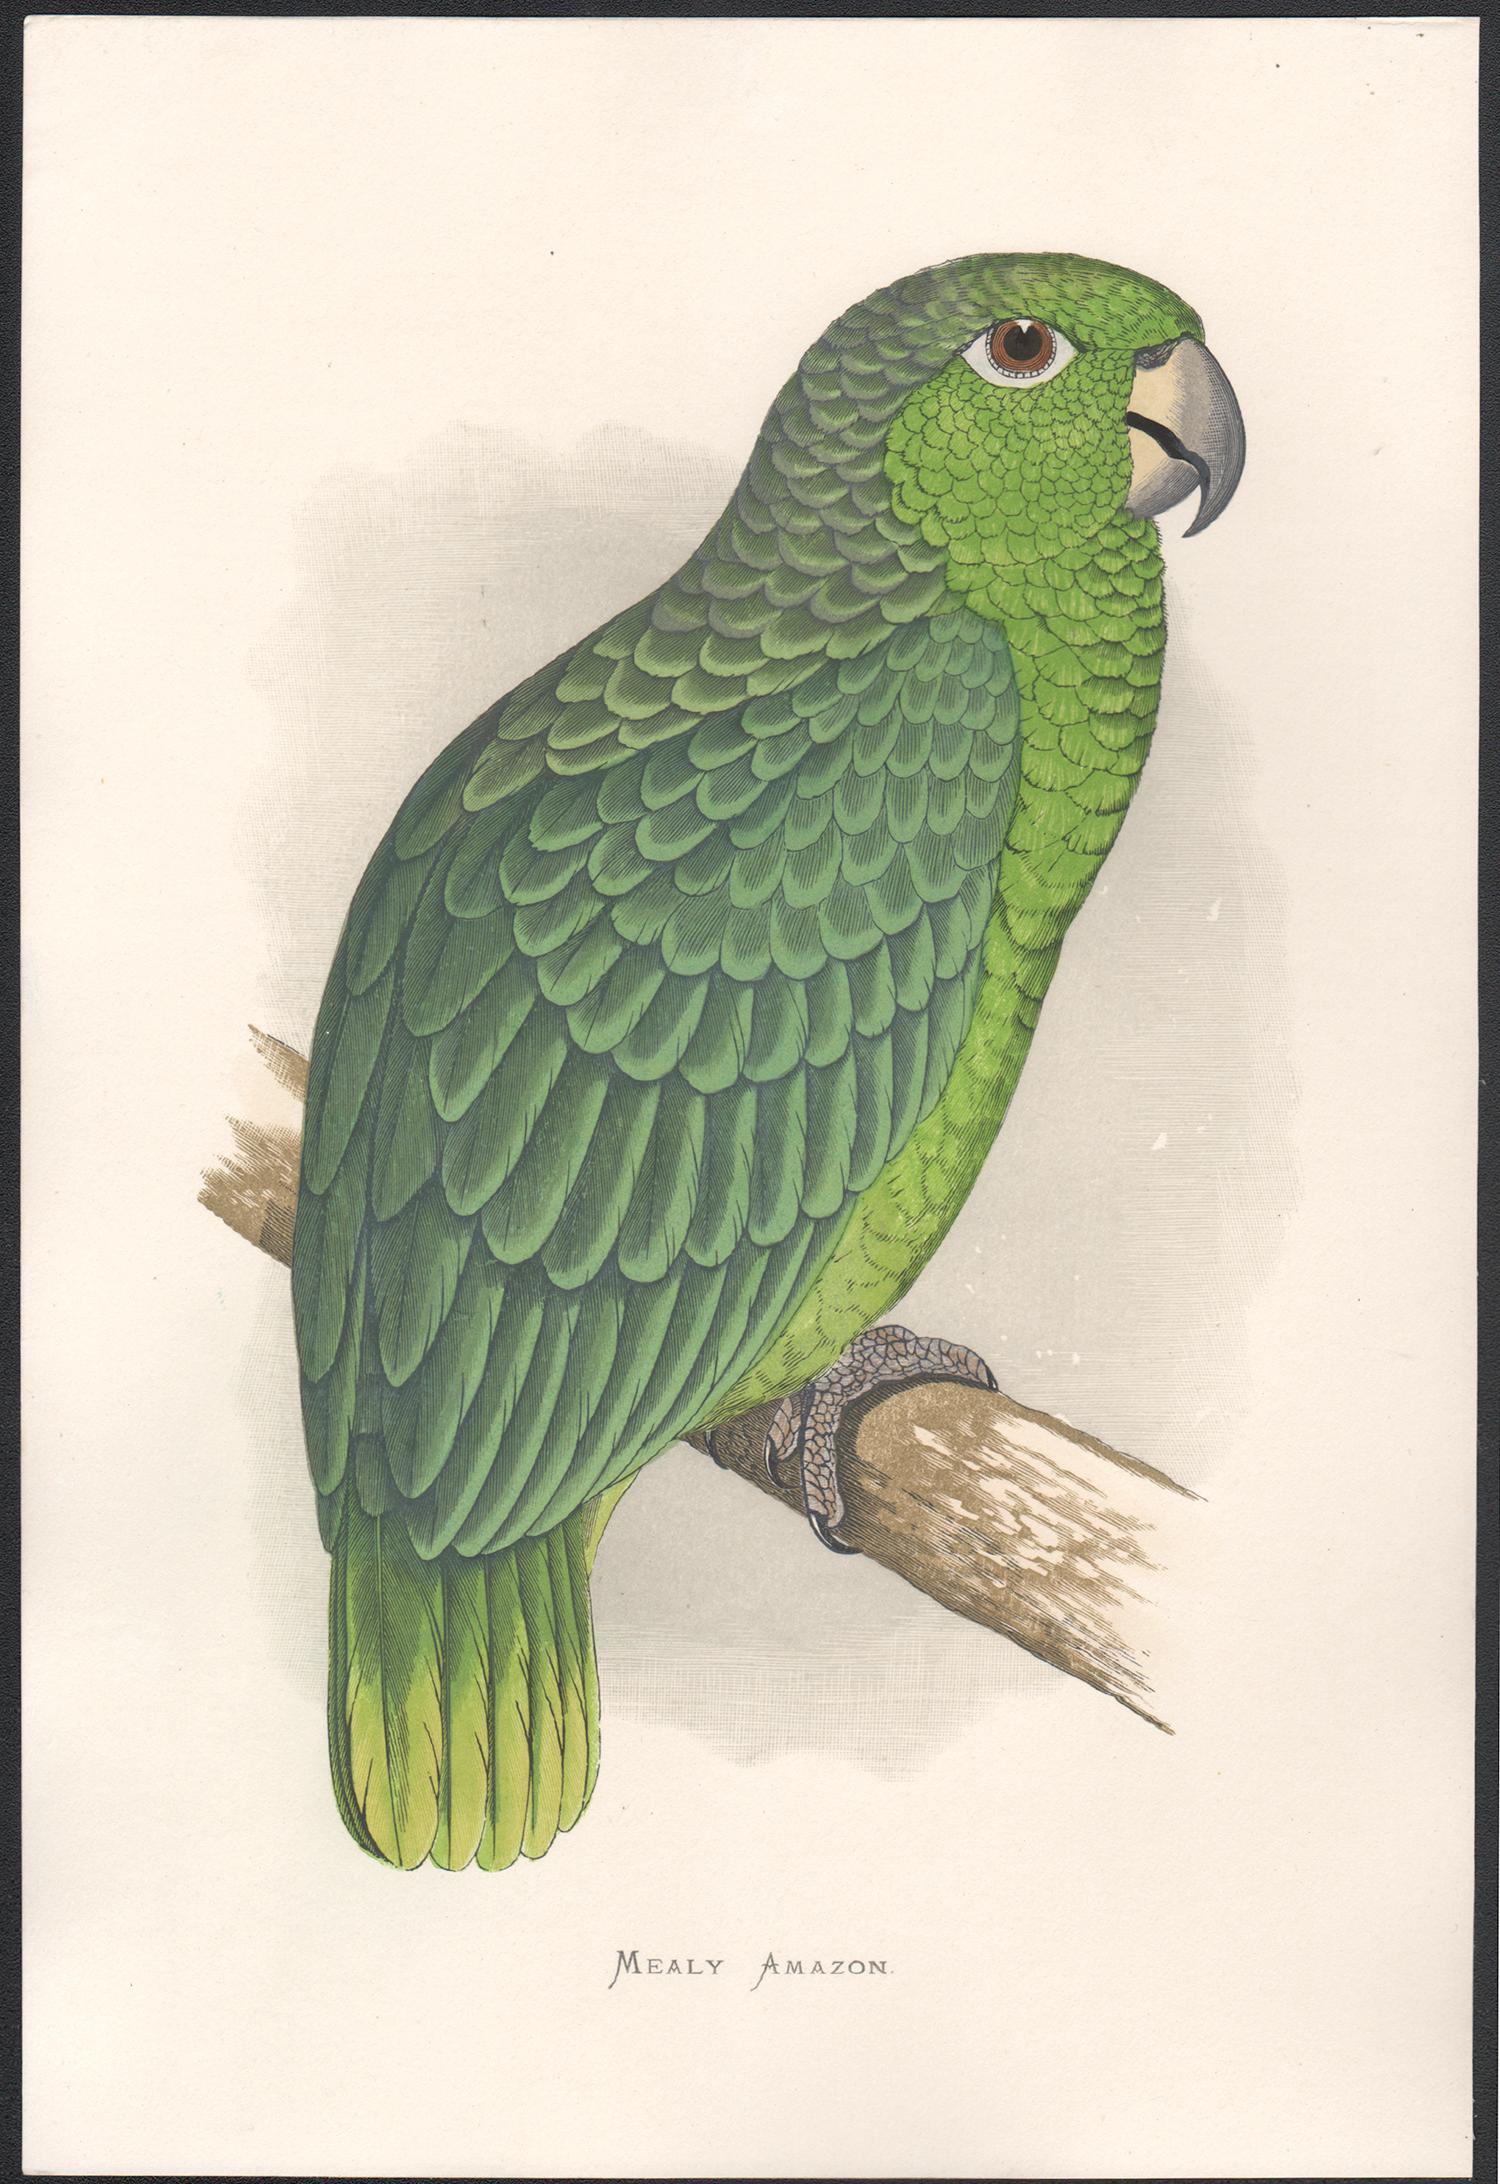 Mealy Amazon, Antique Bird Parrot Chromolithograph, circa 1885 - Print by Benjamin Fawcett